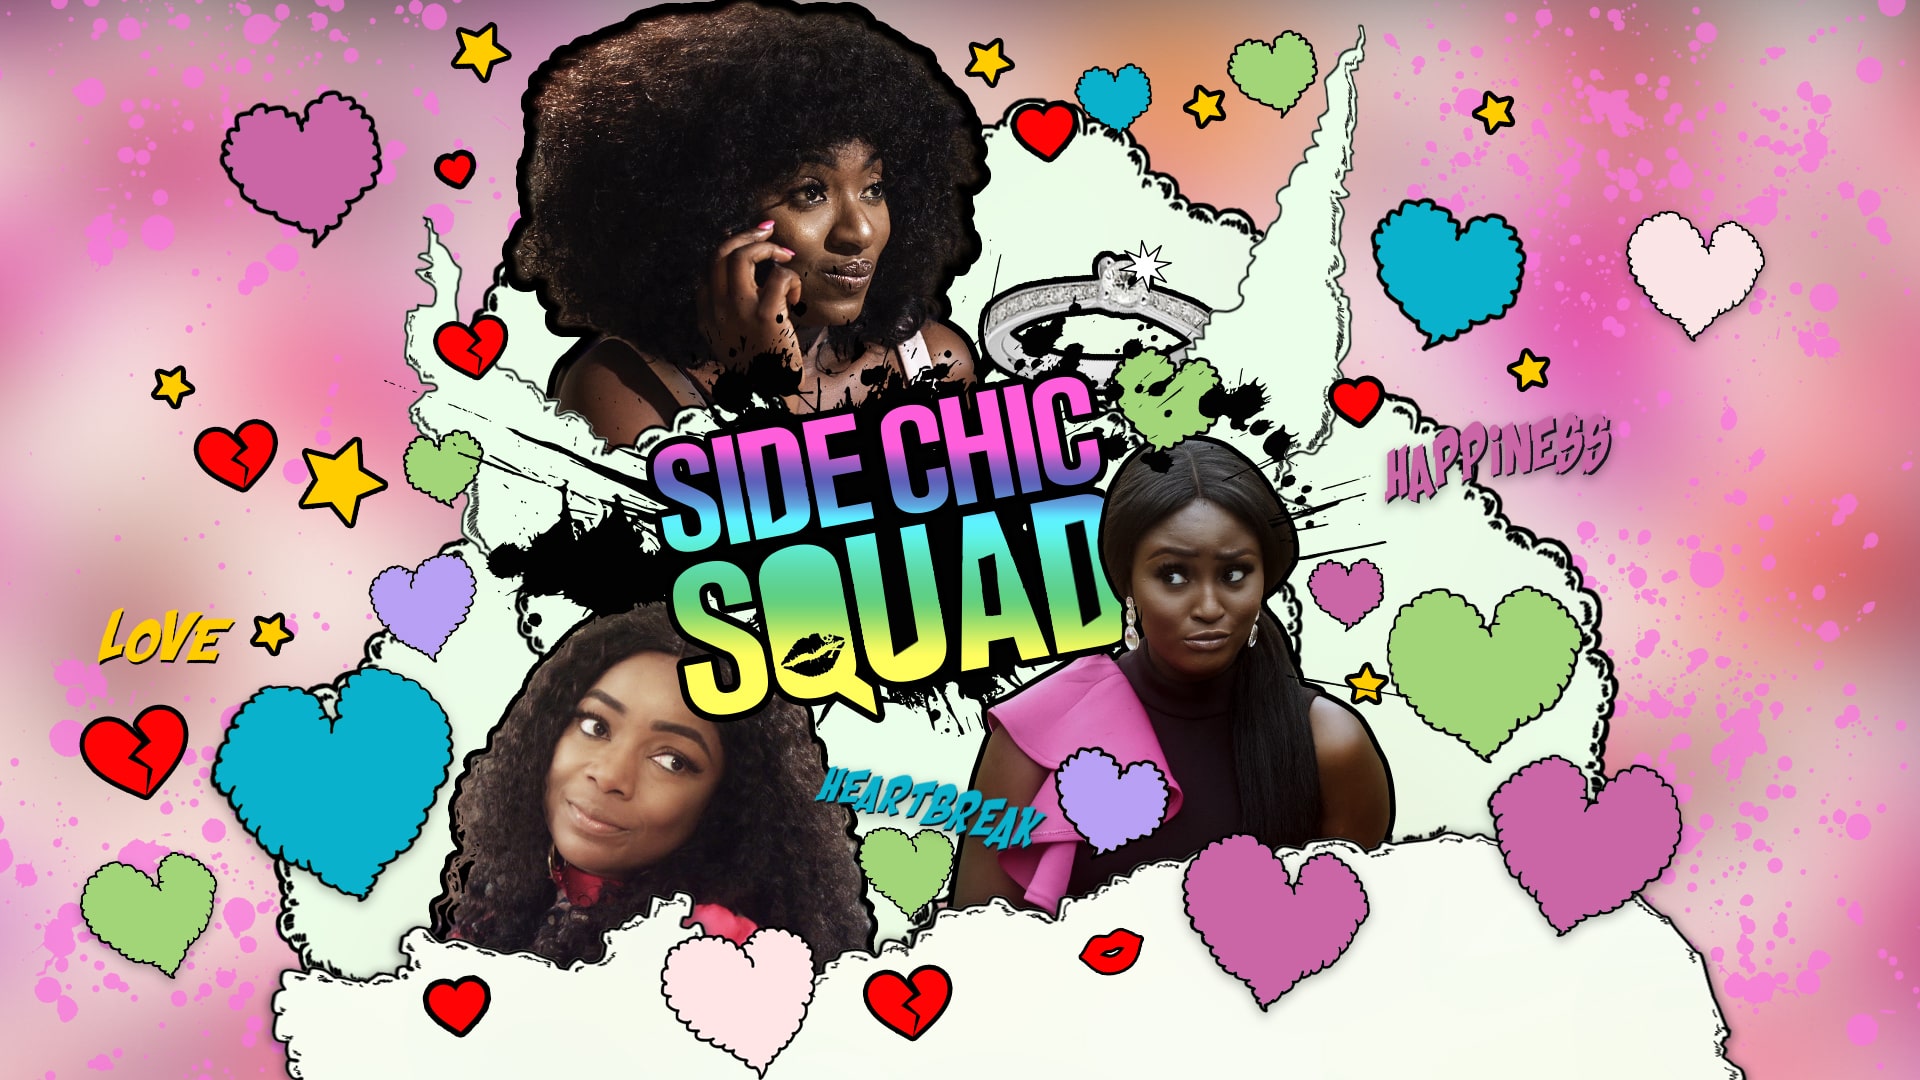 Side Chic Squad